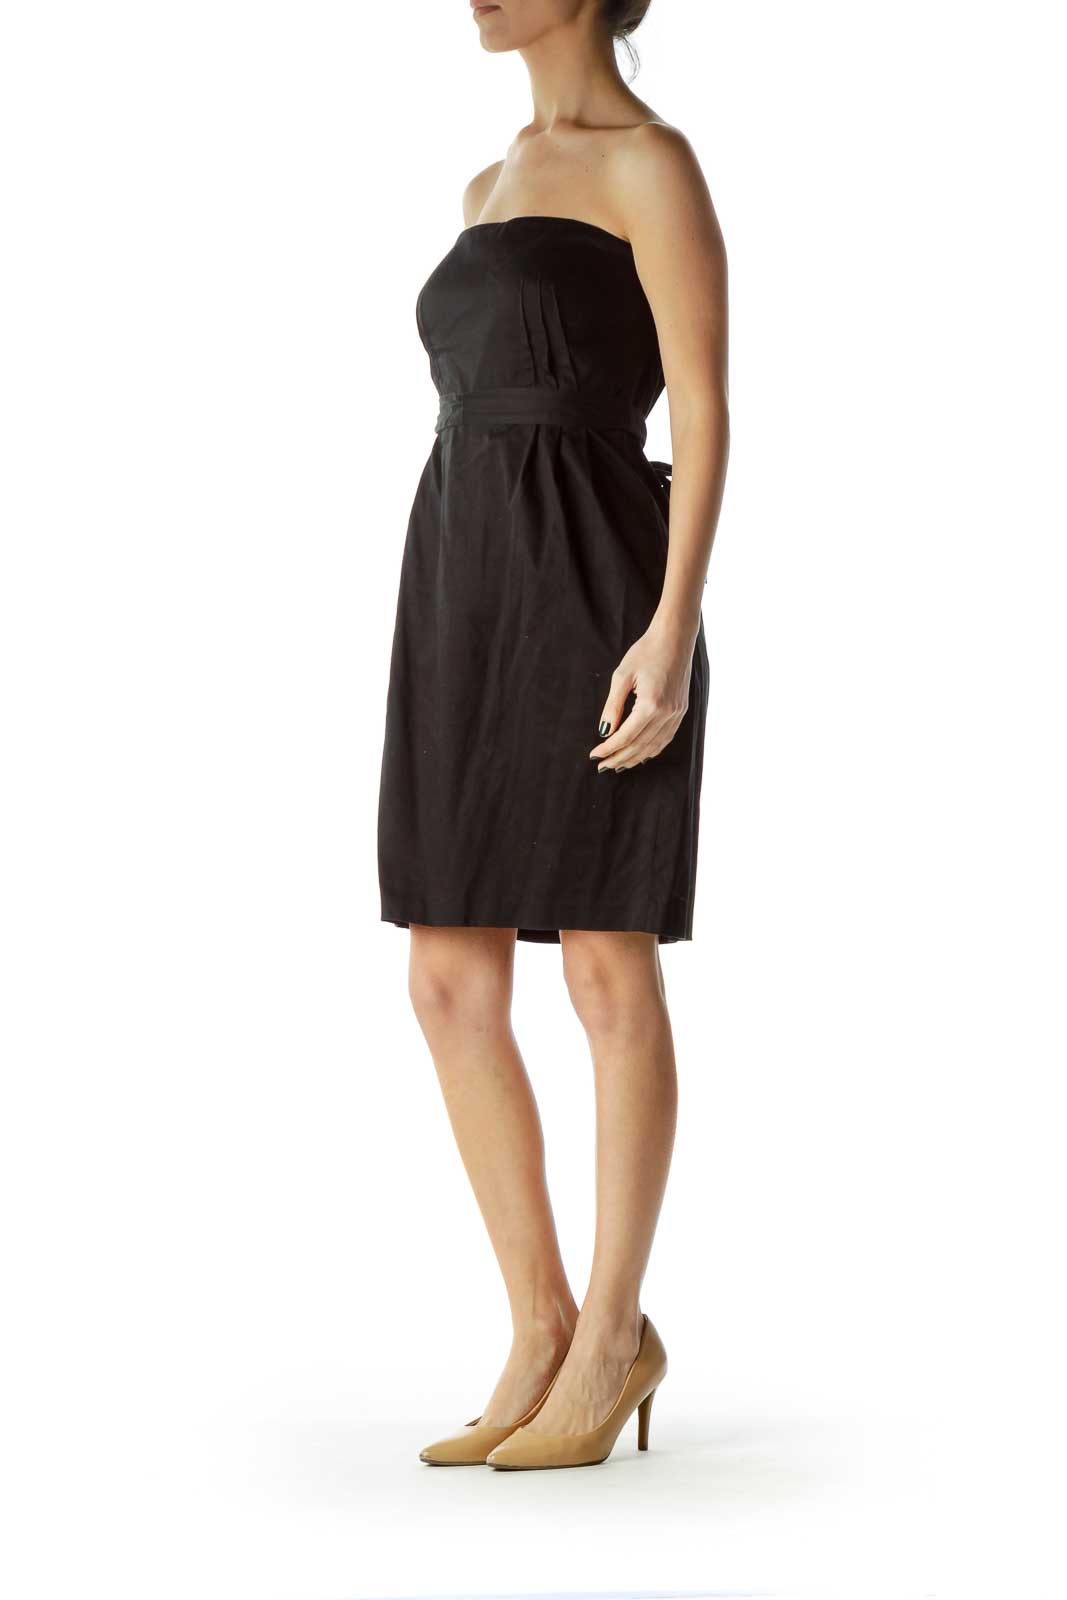 Calvin Klein - Black Strapless Dress with Built In Corset Cotton Spandex |  SilkRoll